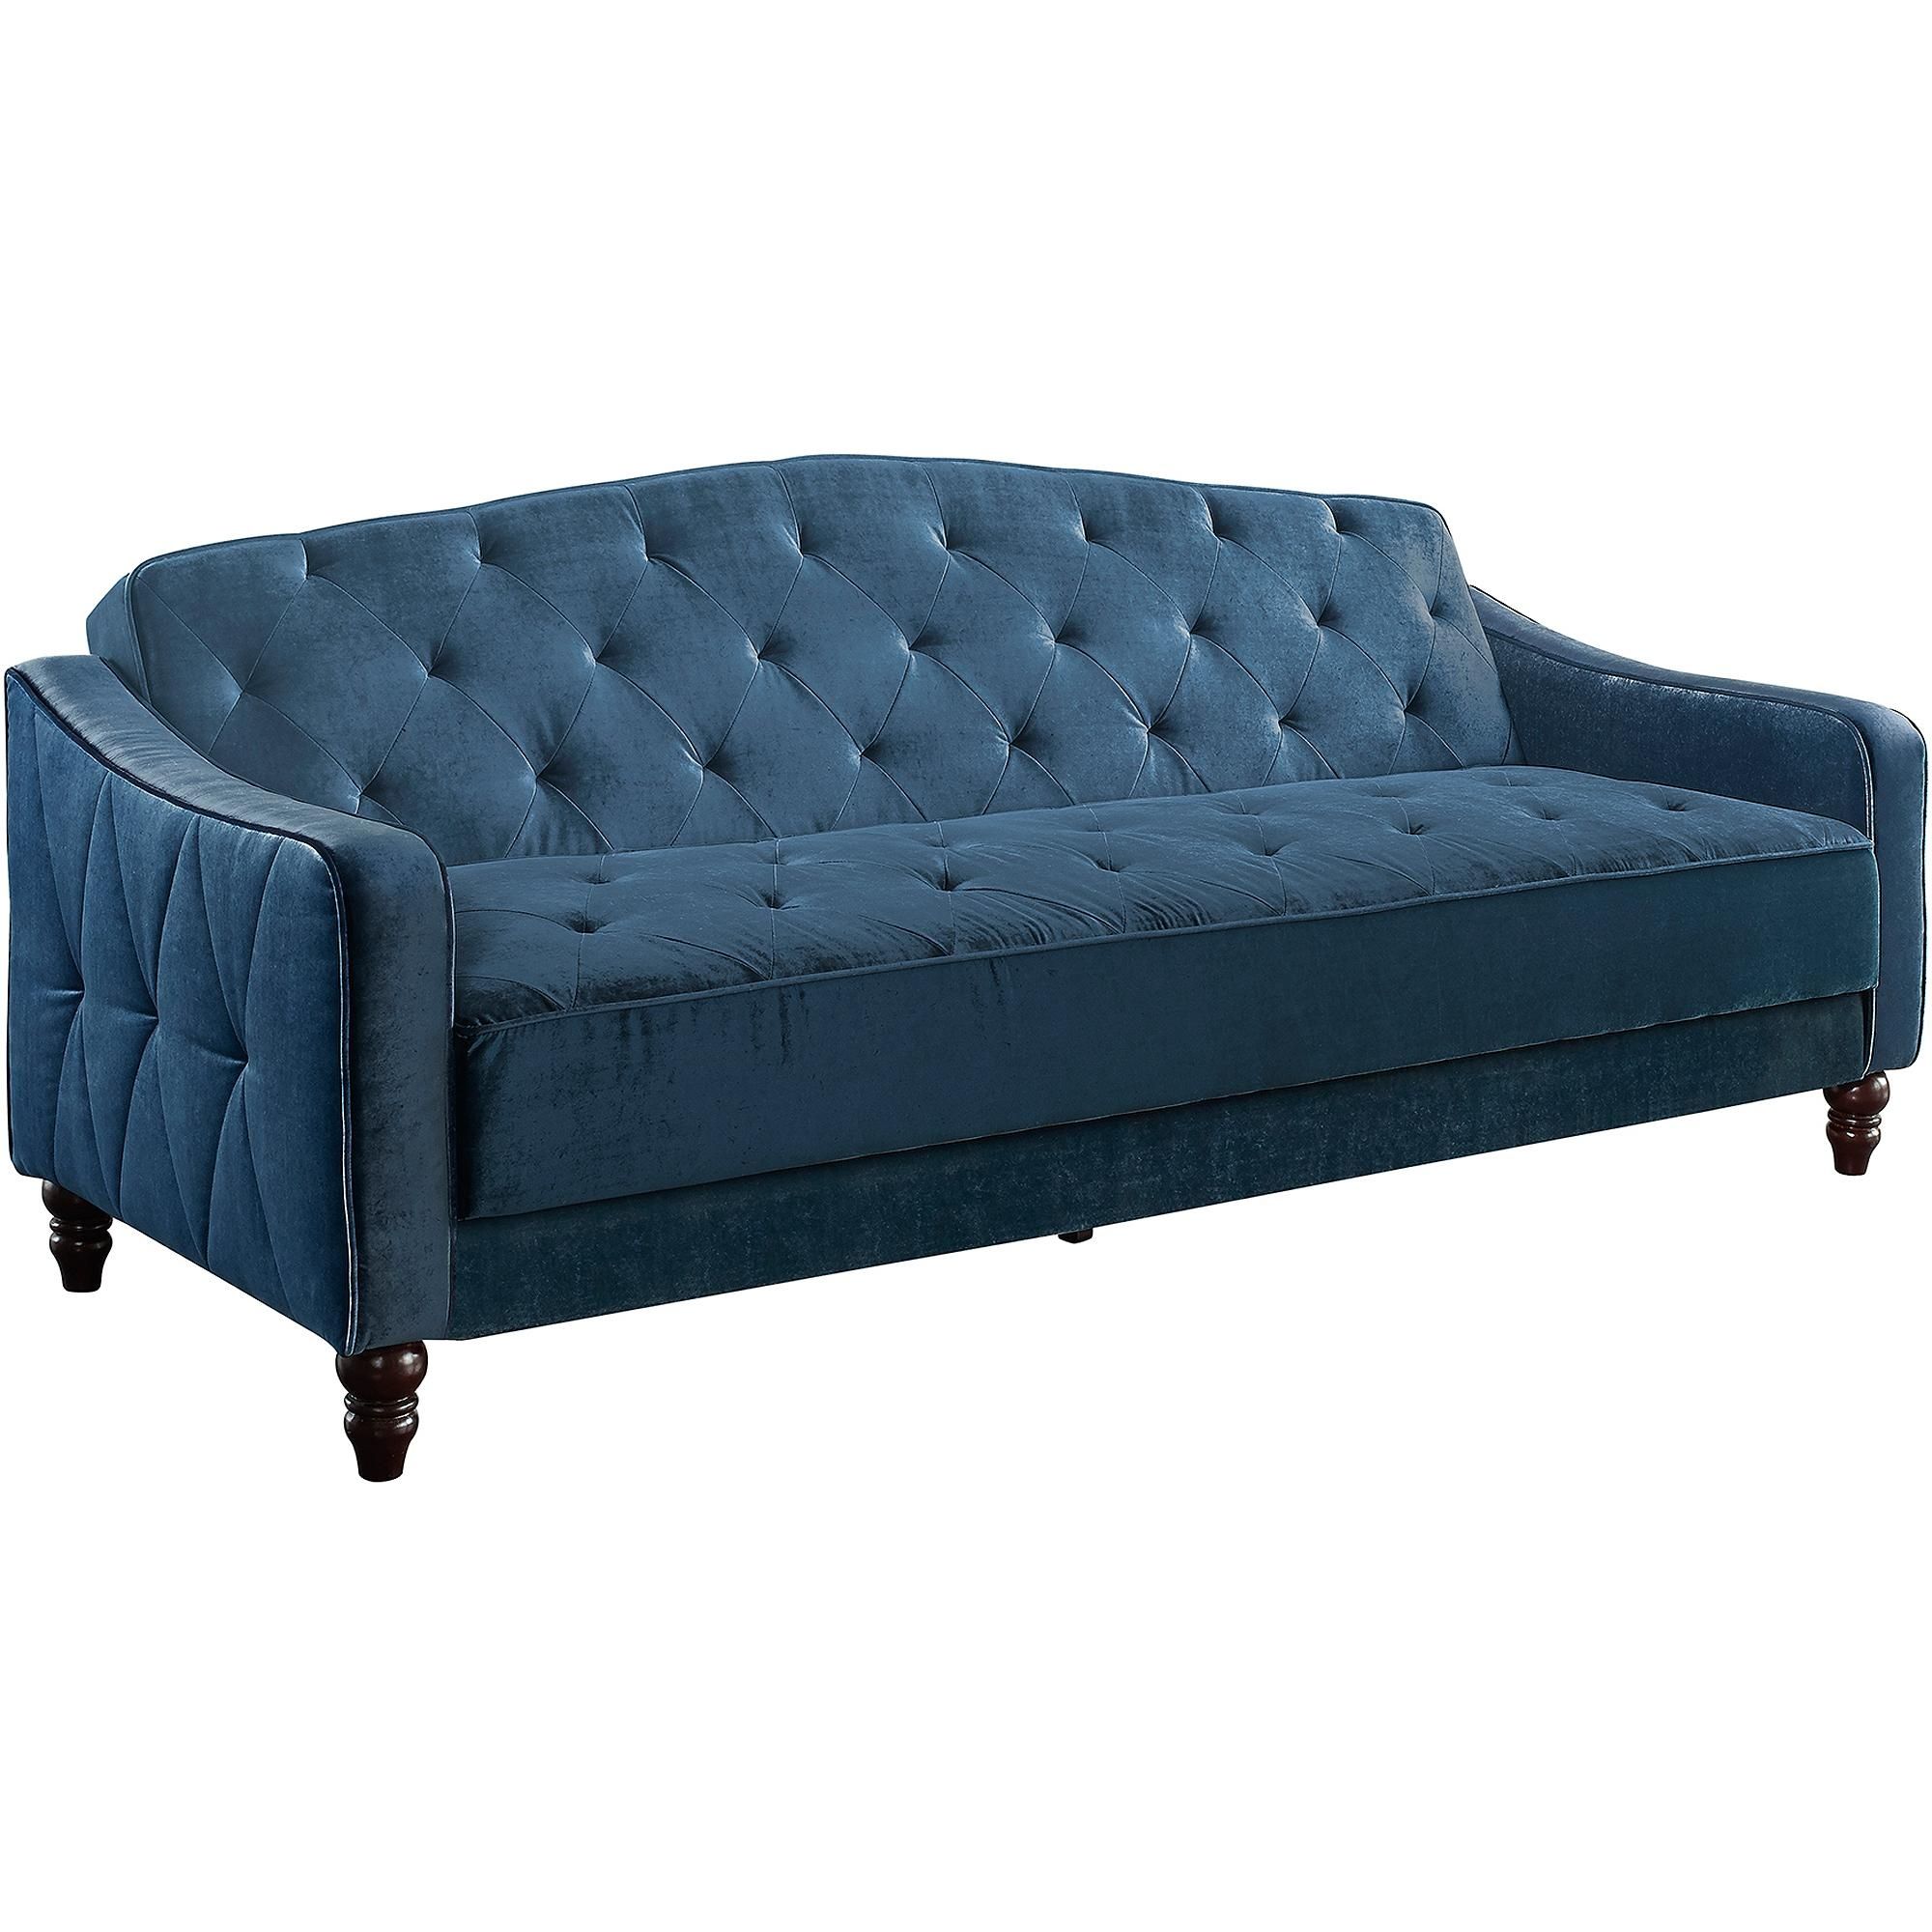 Furniture: Leather Futon Walmart | Futons At Kmart | Futon Full Size Pertaining To Kmart Sleeper Sofas (View 2 of 20)